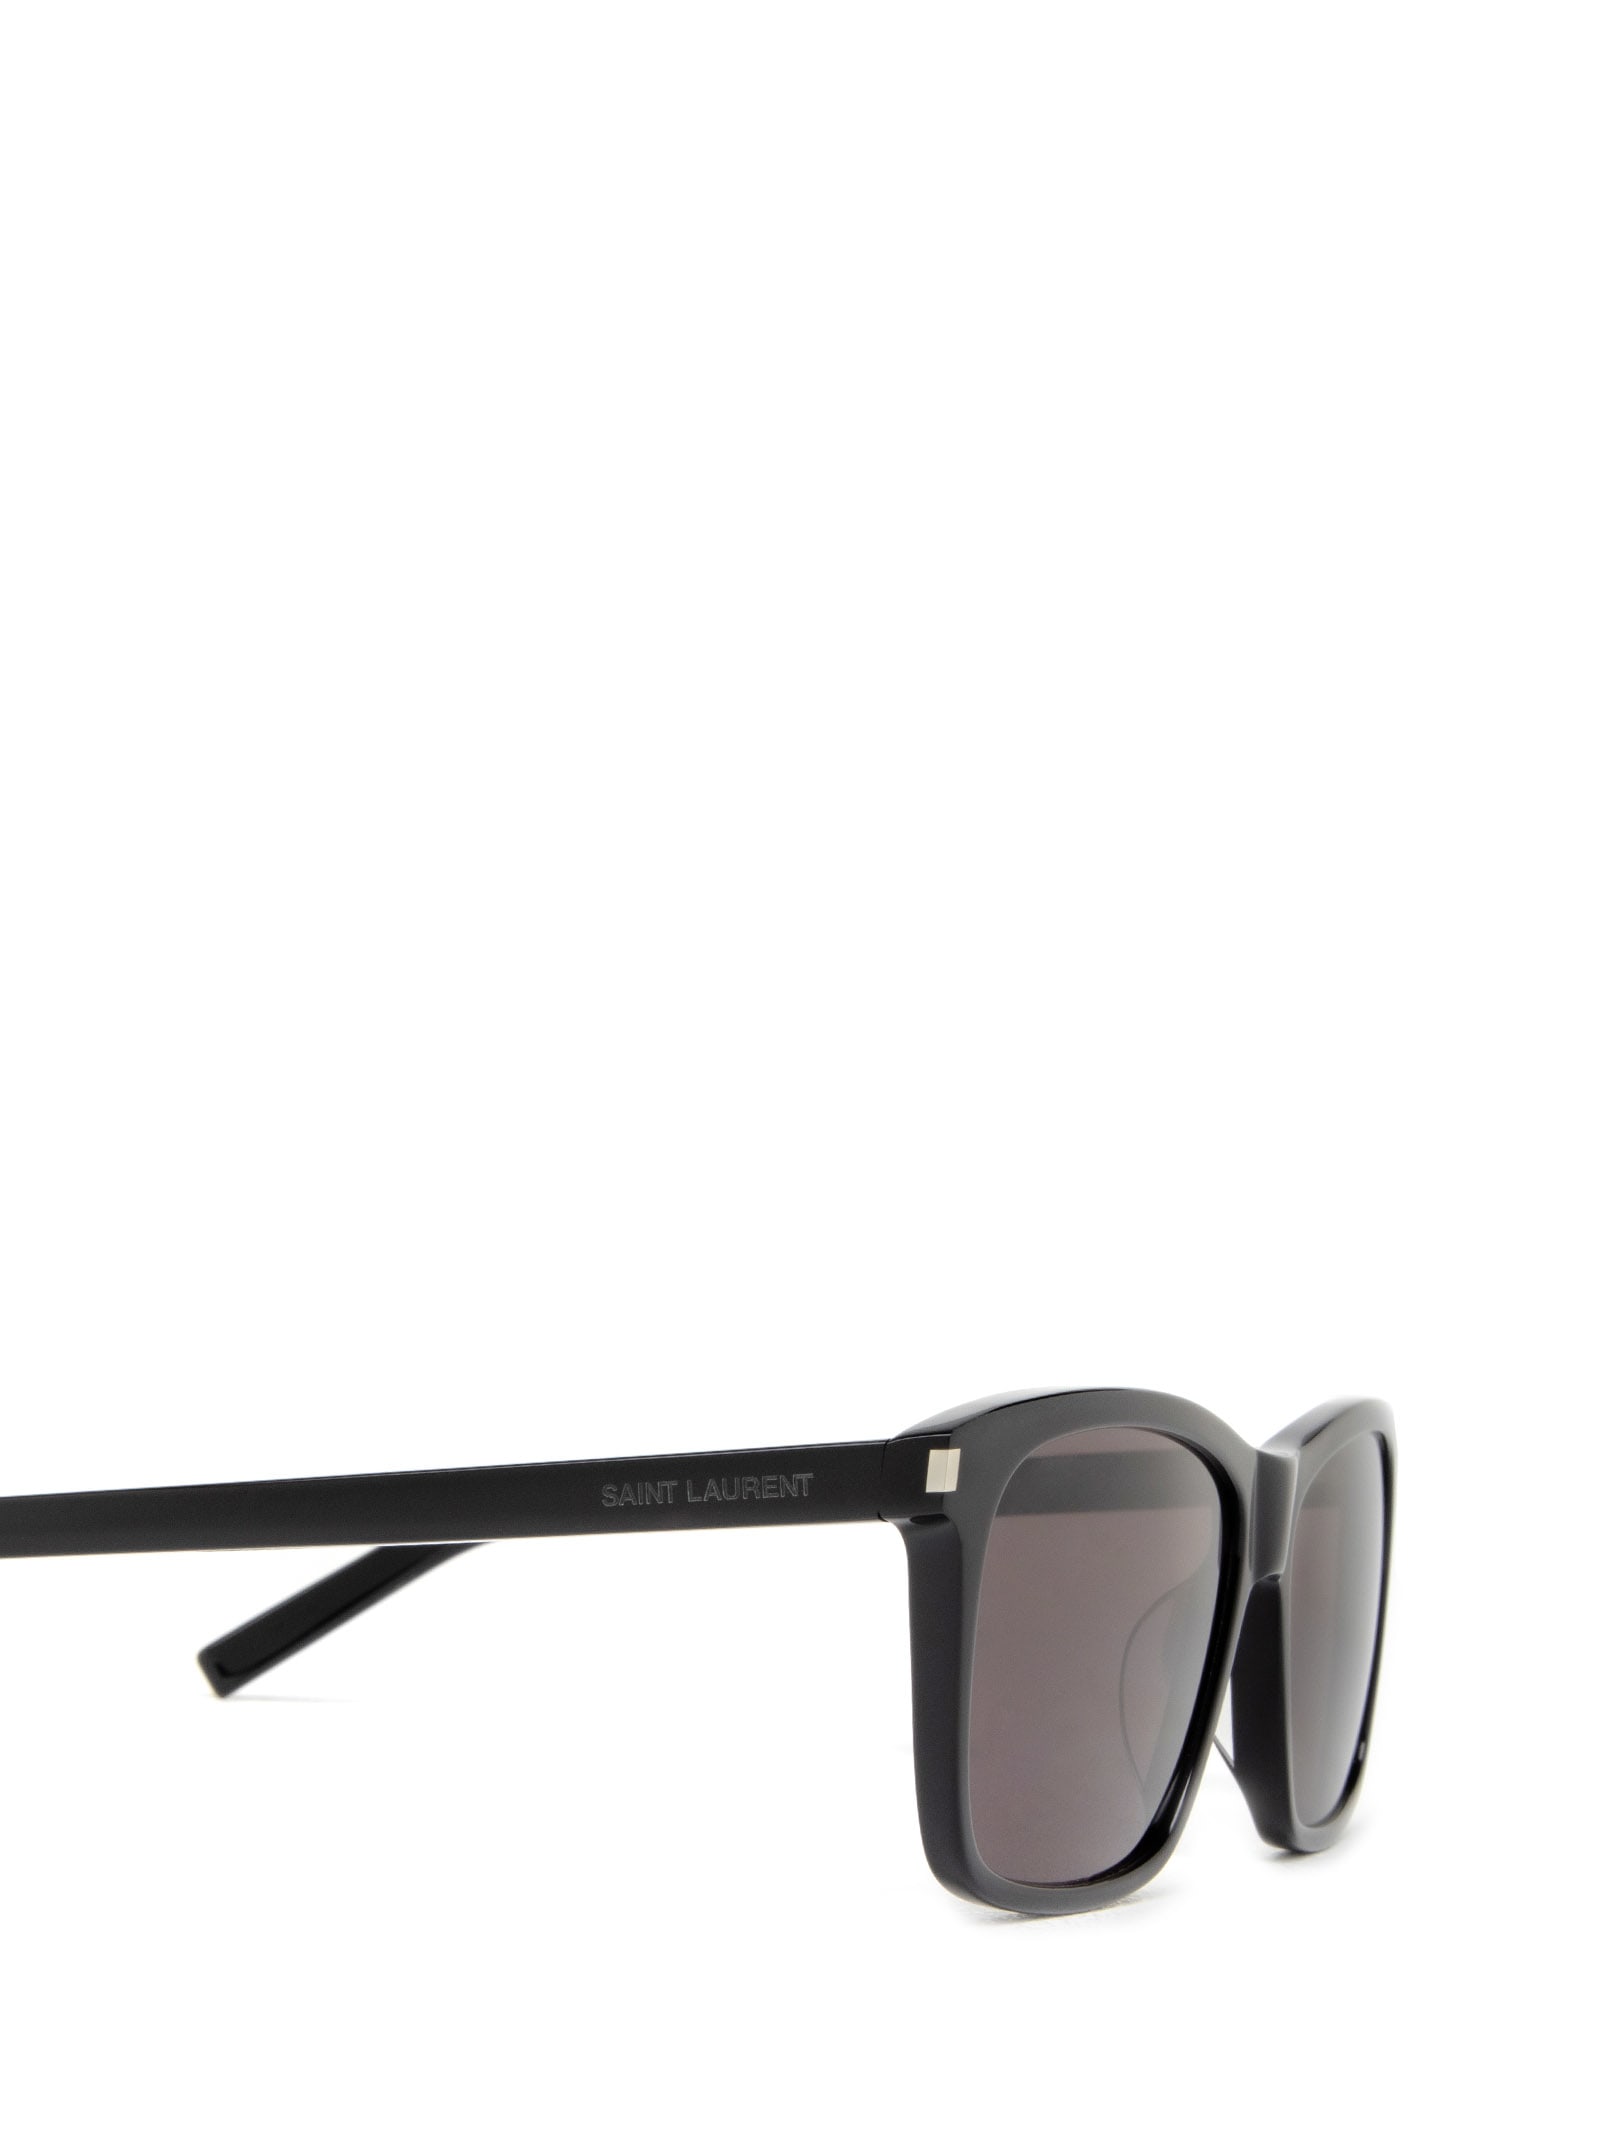 Yves Saint Laurent Sunglasses SL-339 001